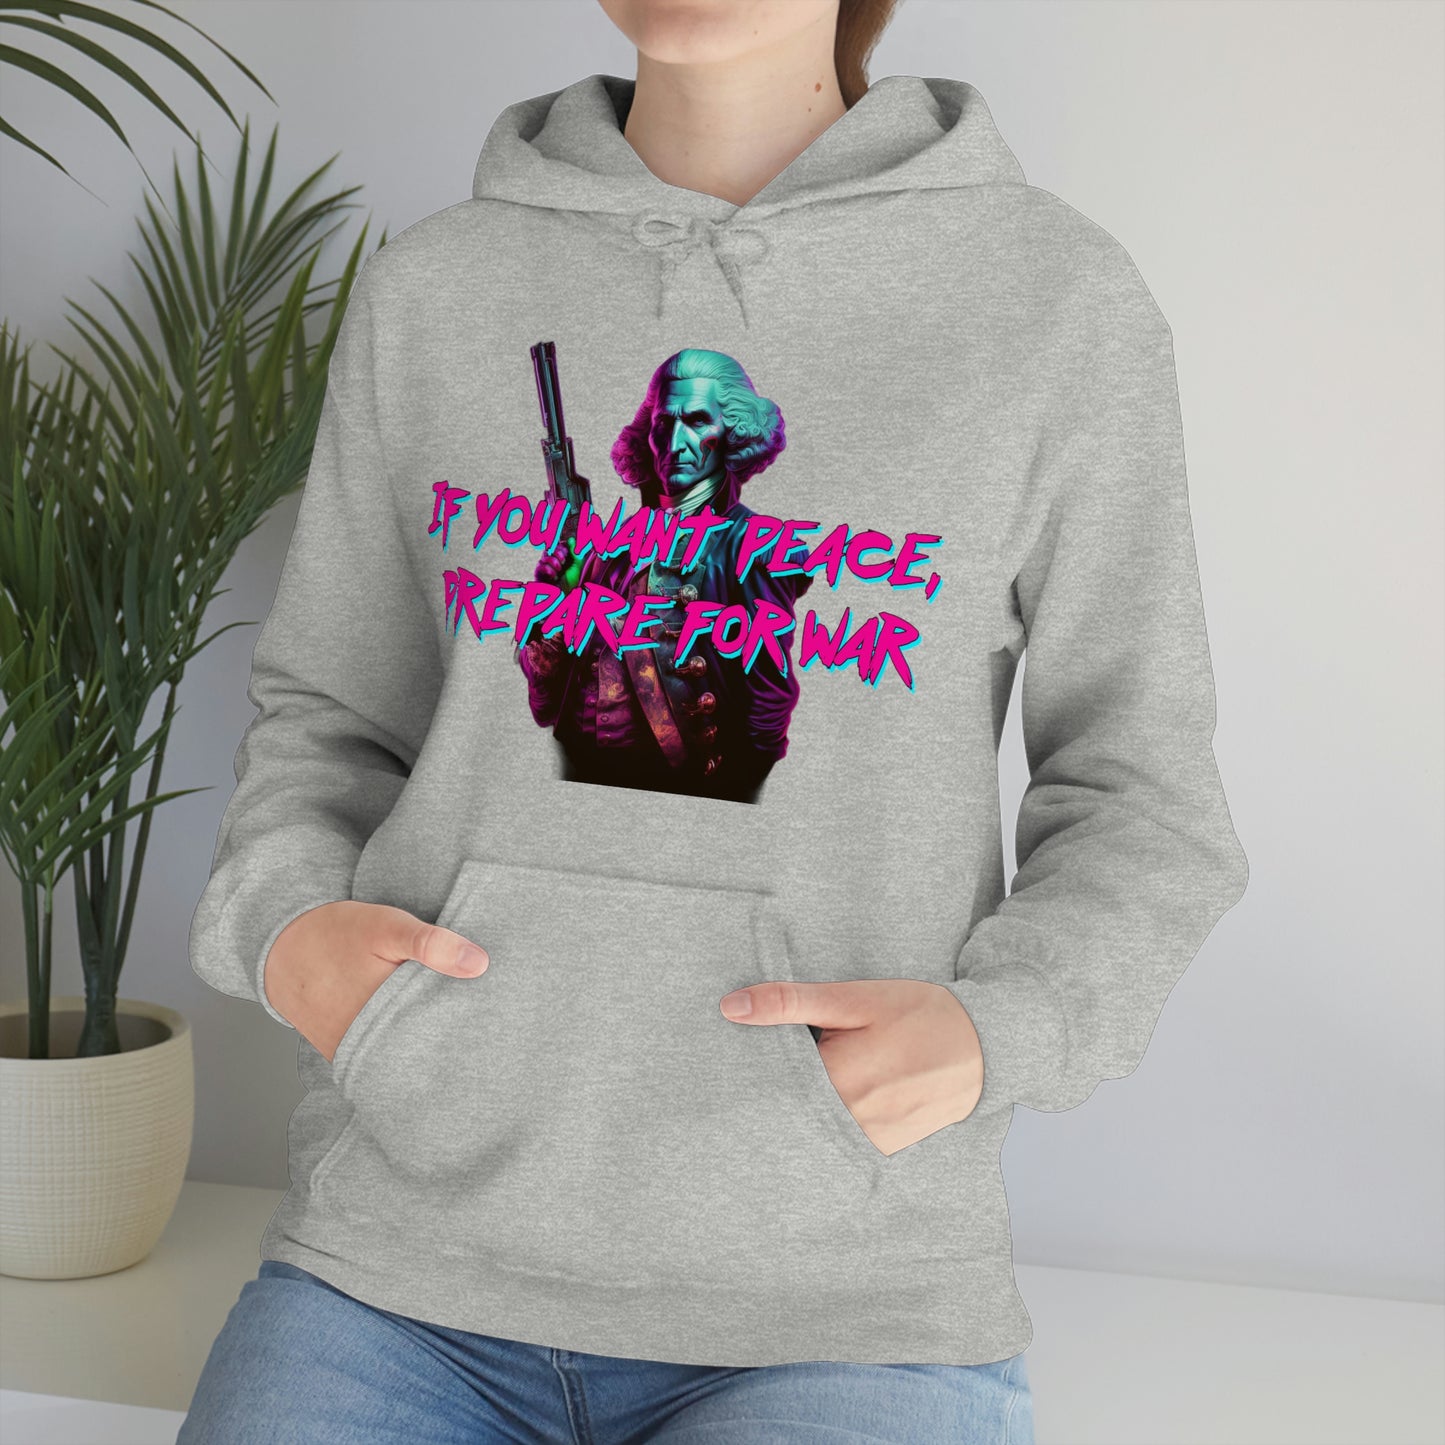 George Washington "Warrior" Synthwave Hooded Sweatshirt